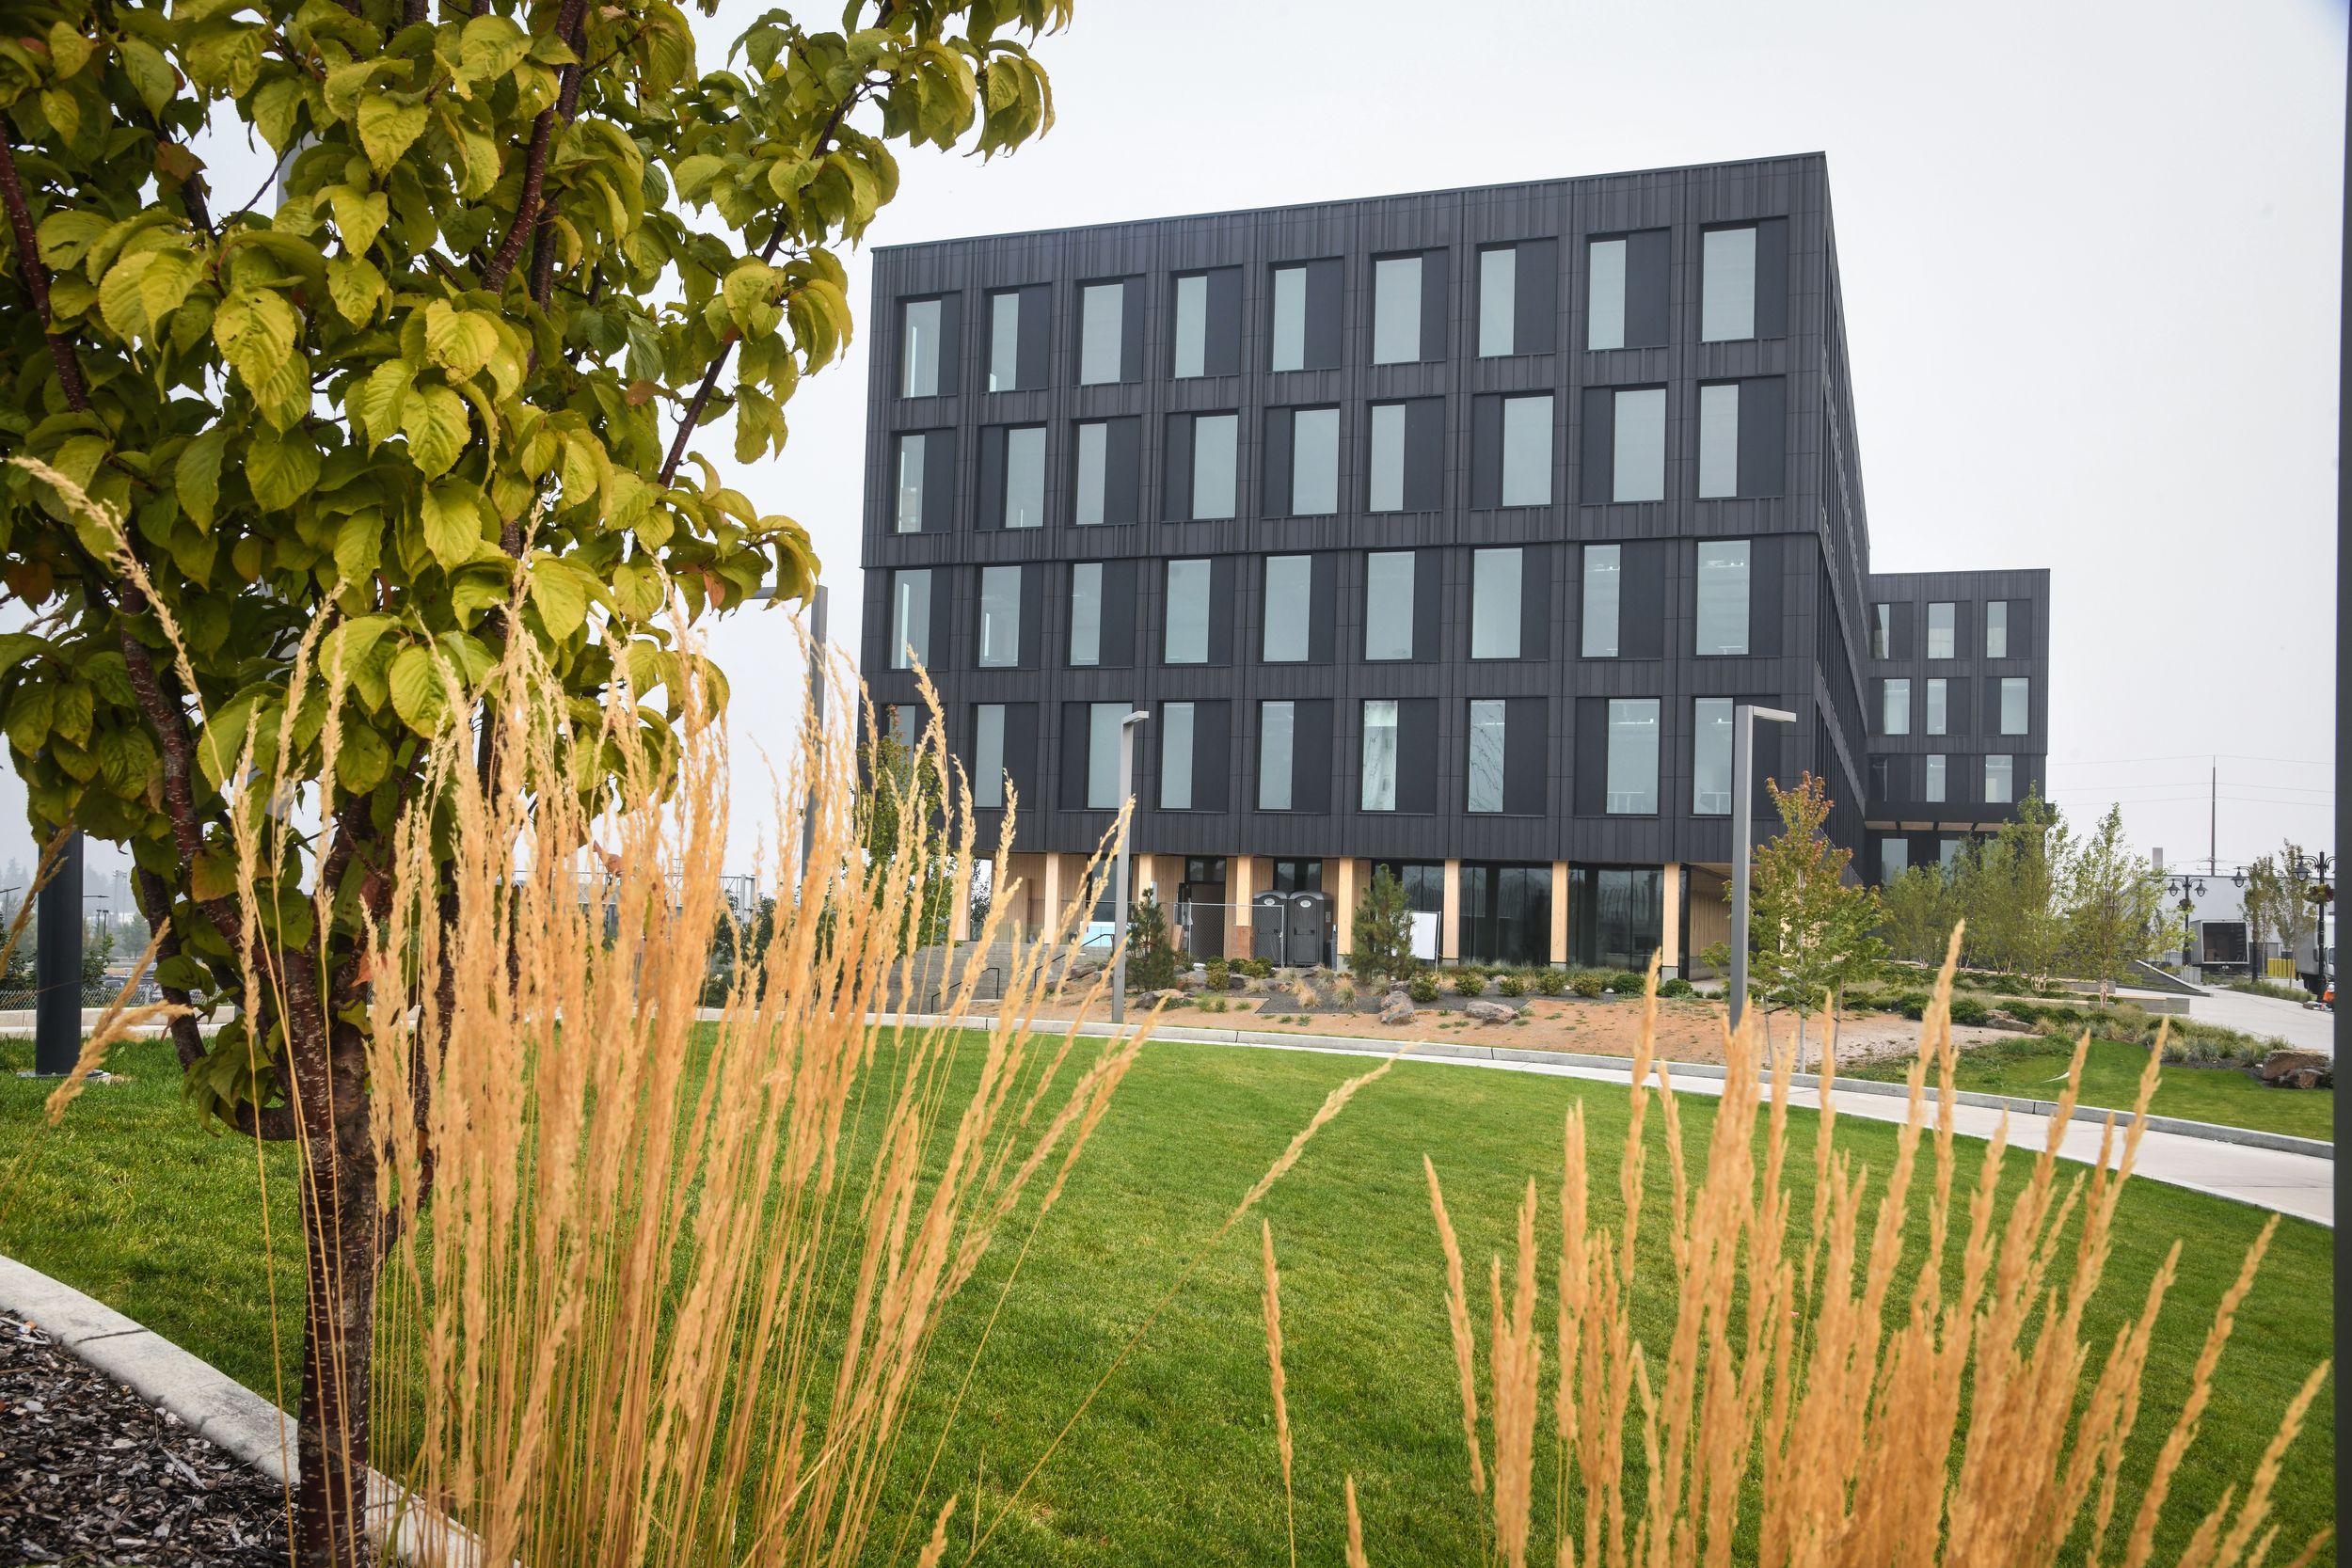 Western Washington University breaks ground on carbon neutral academic  building